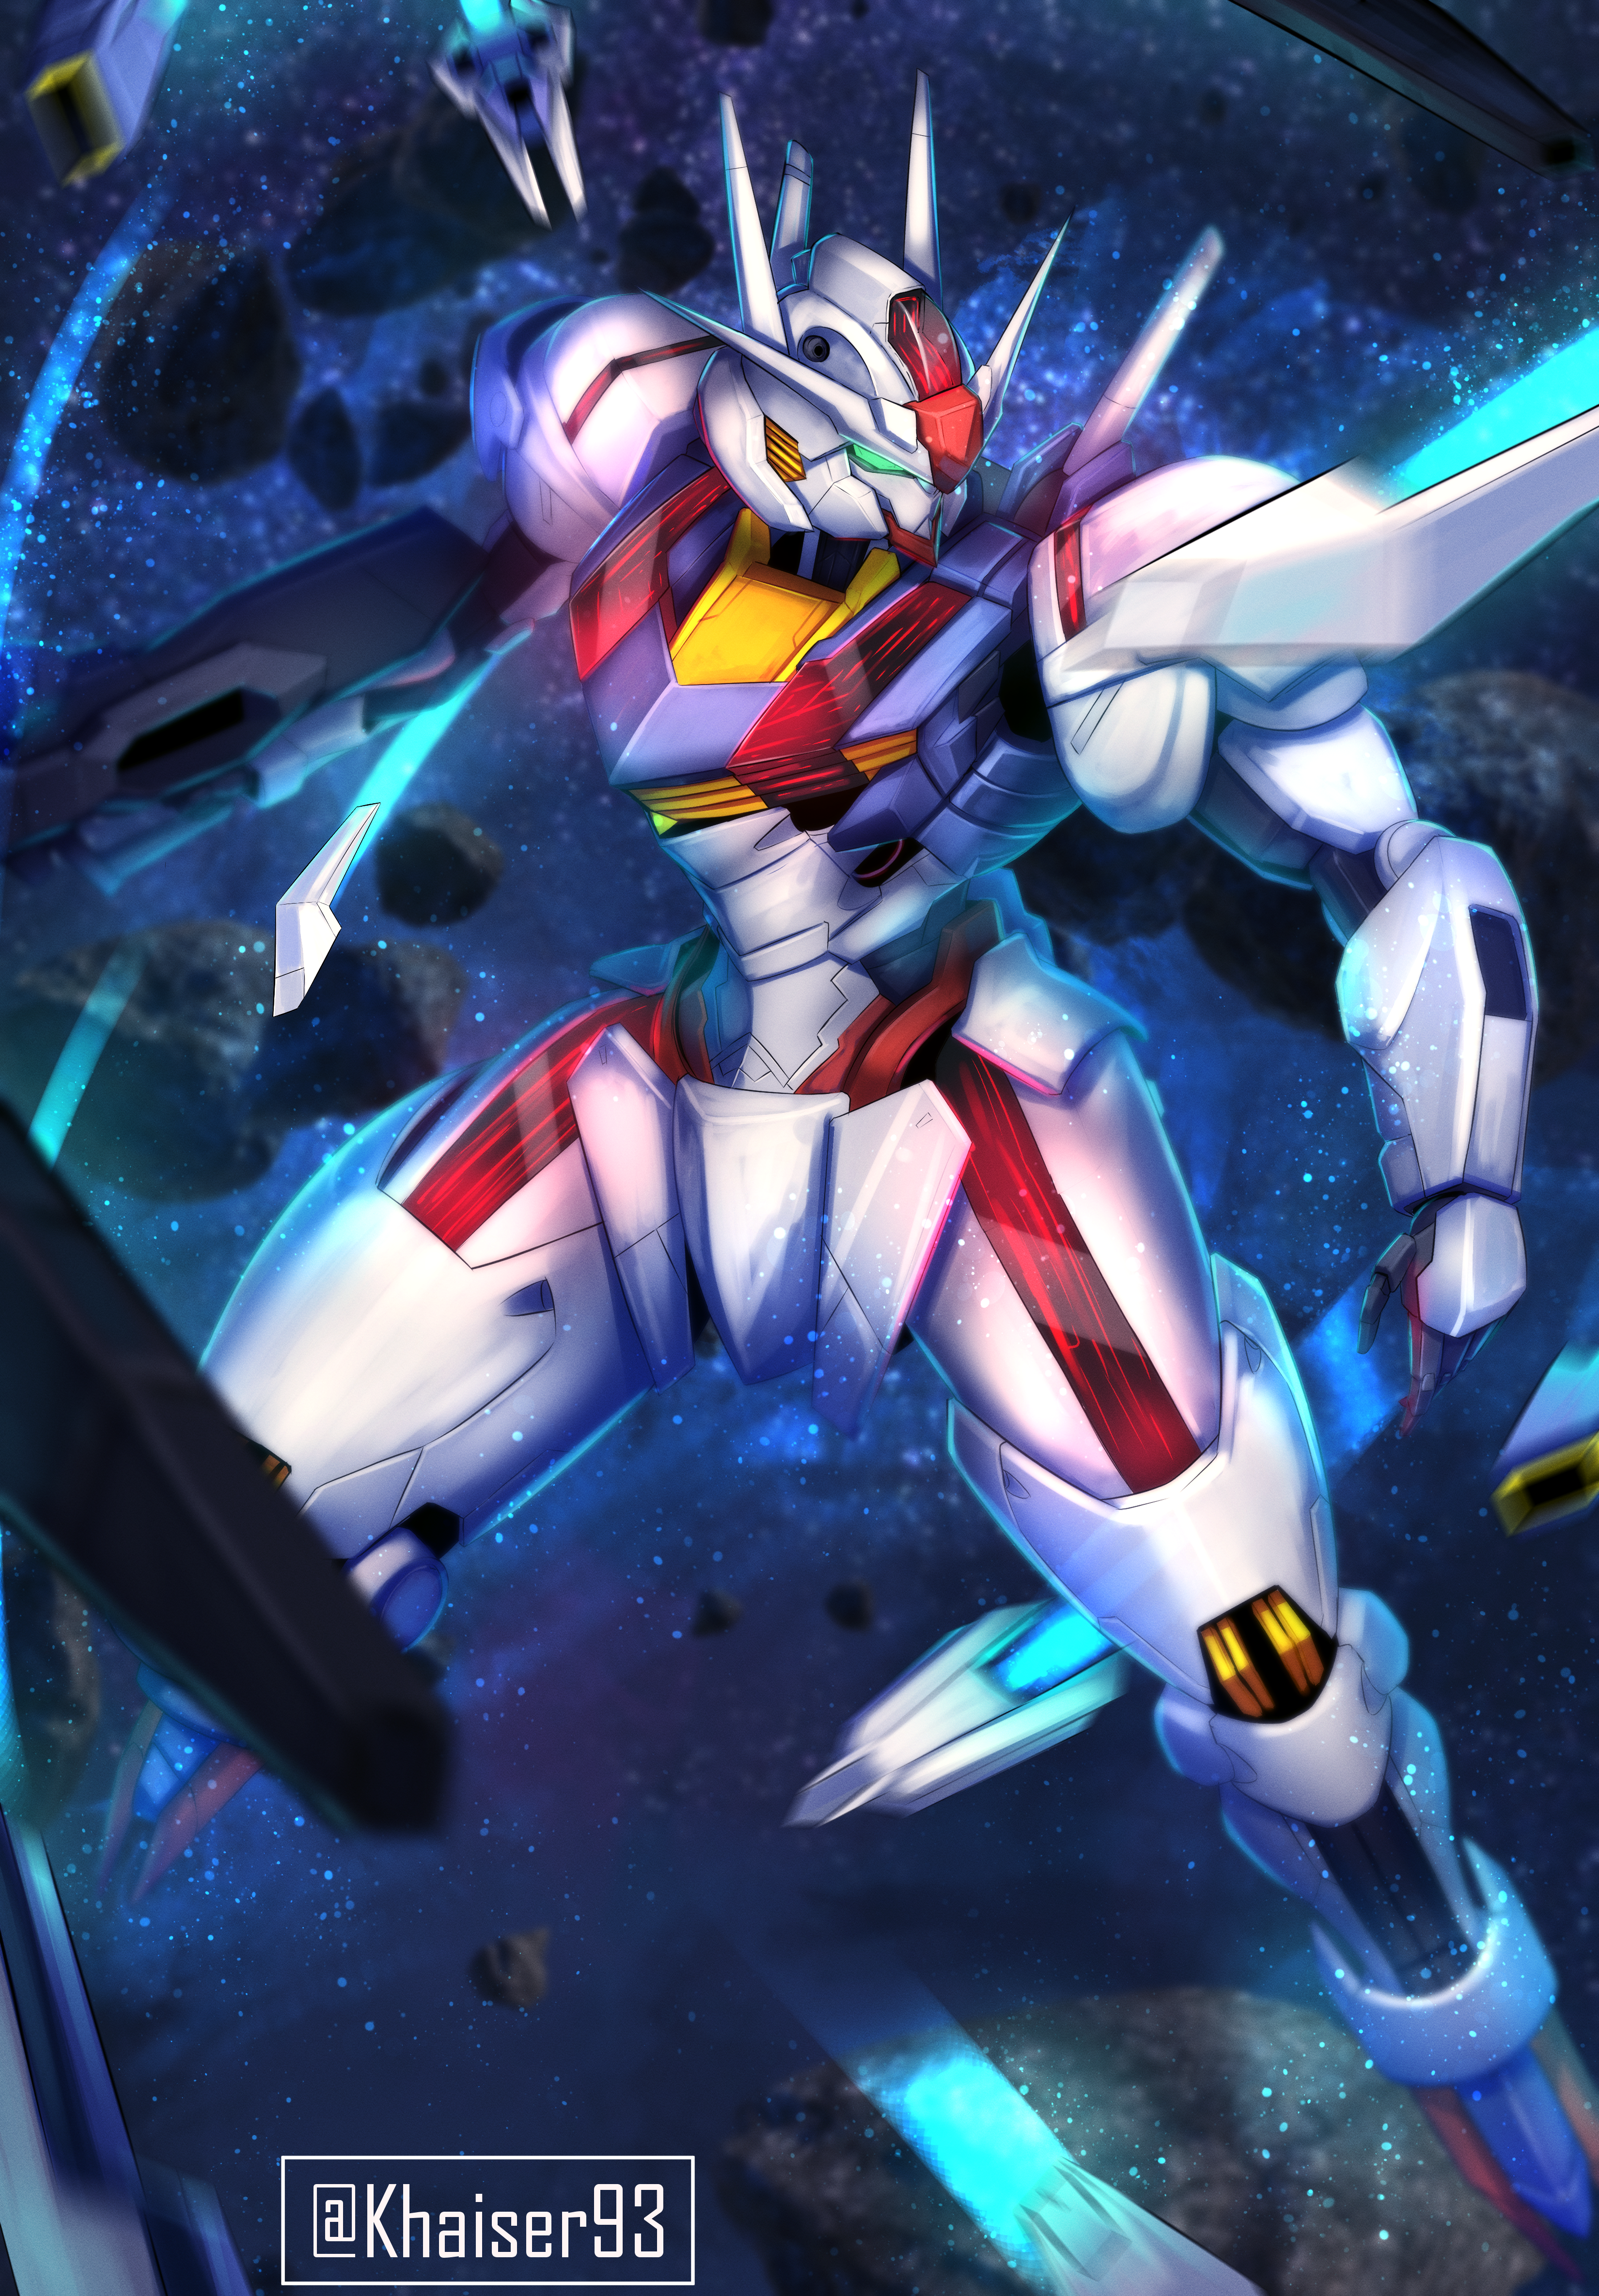 Gundam Aerial by Khaizer93 on Newgrounds